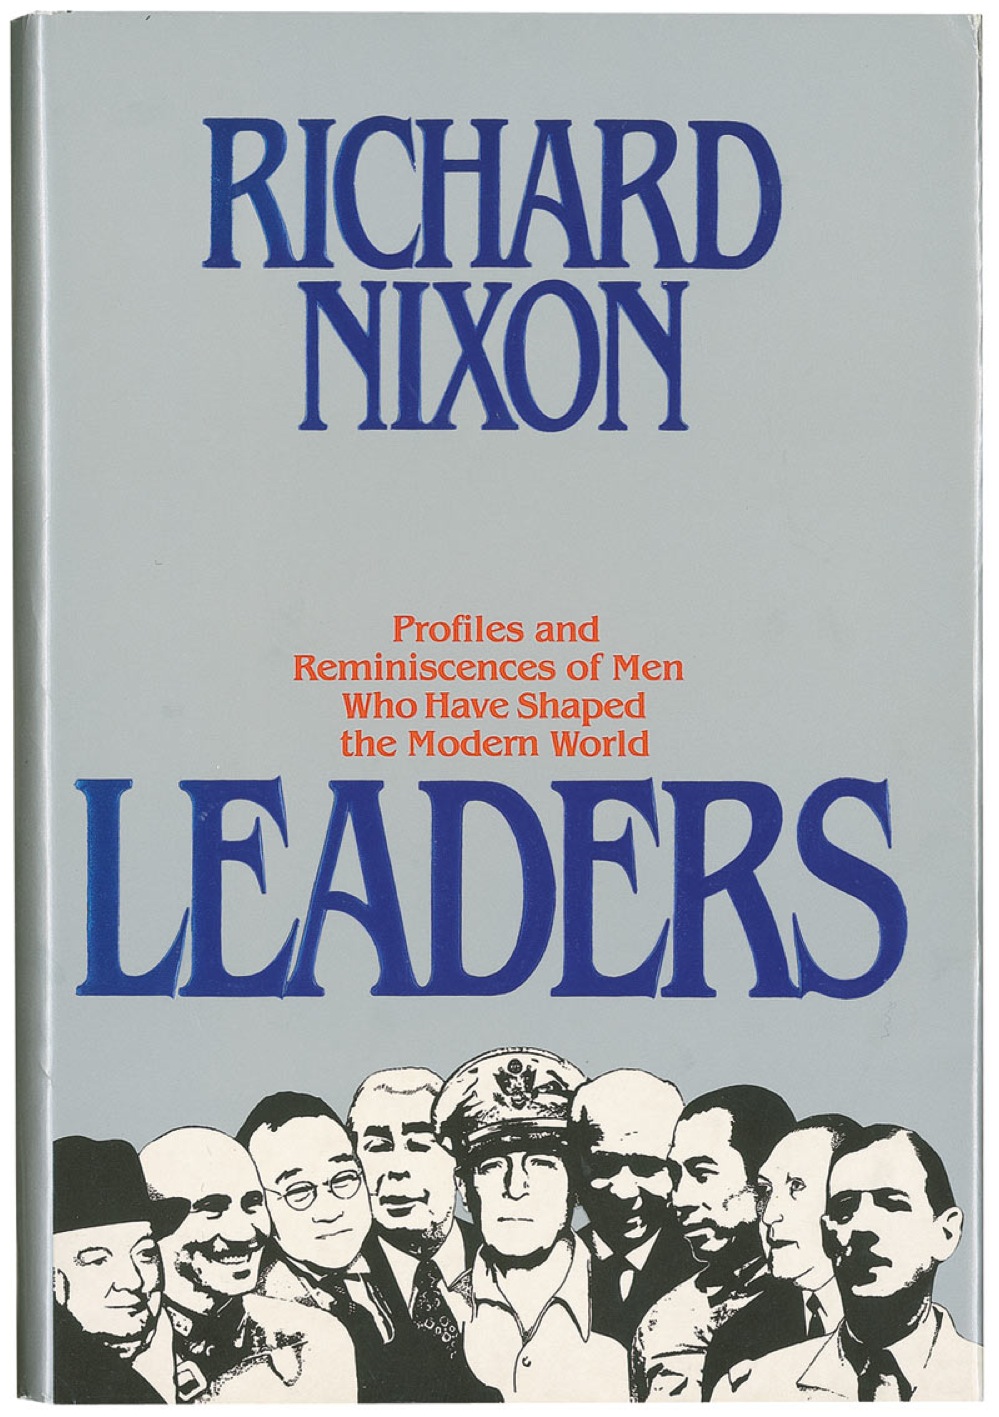 Lot #85 Richard Nixon